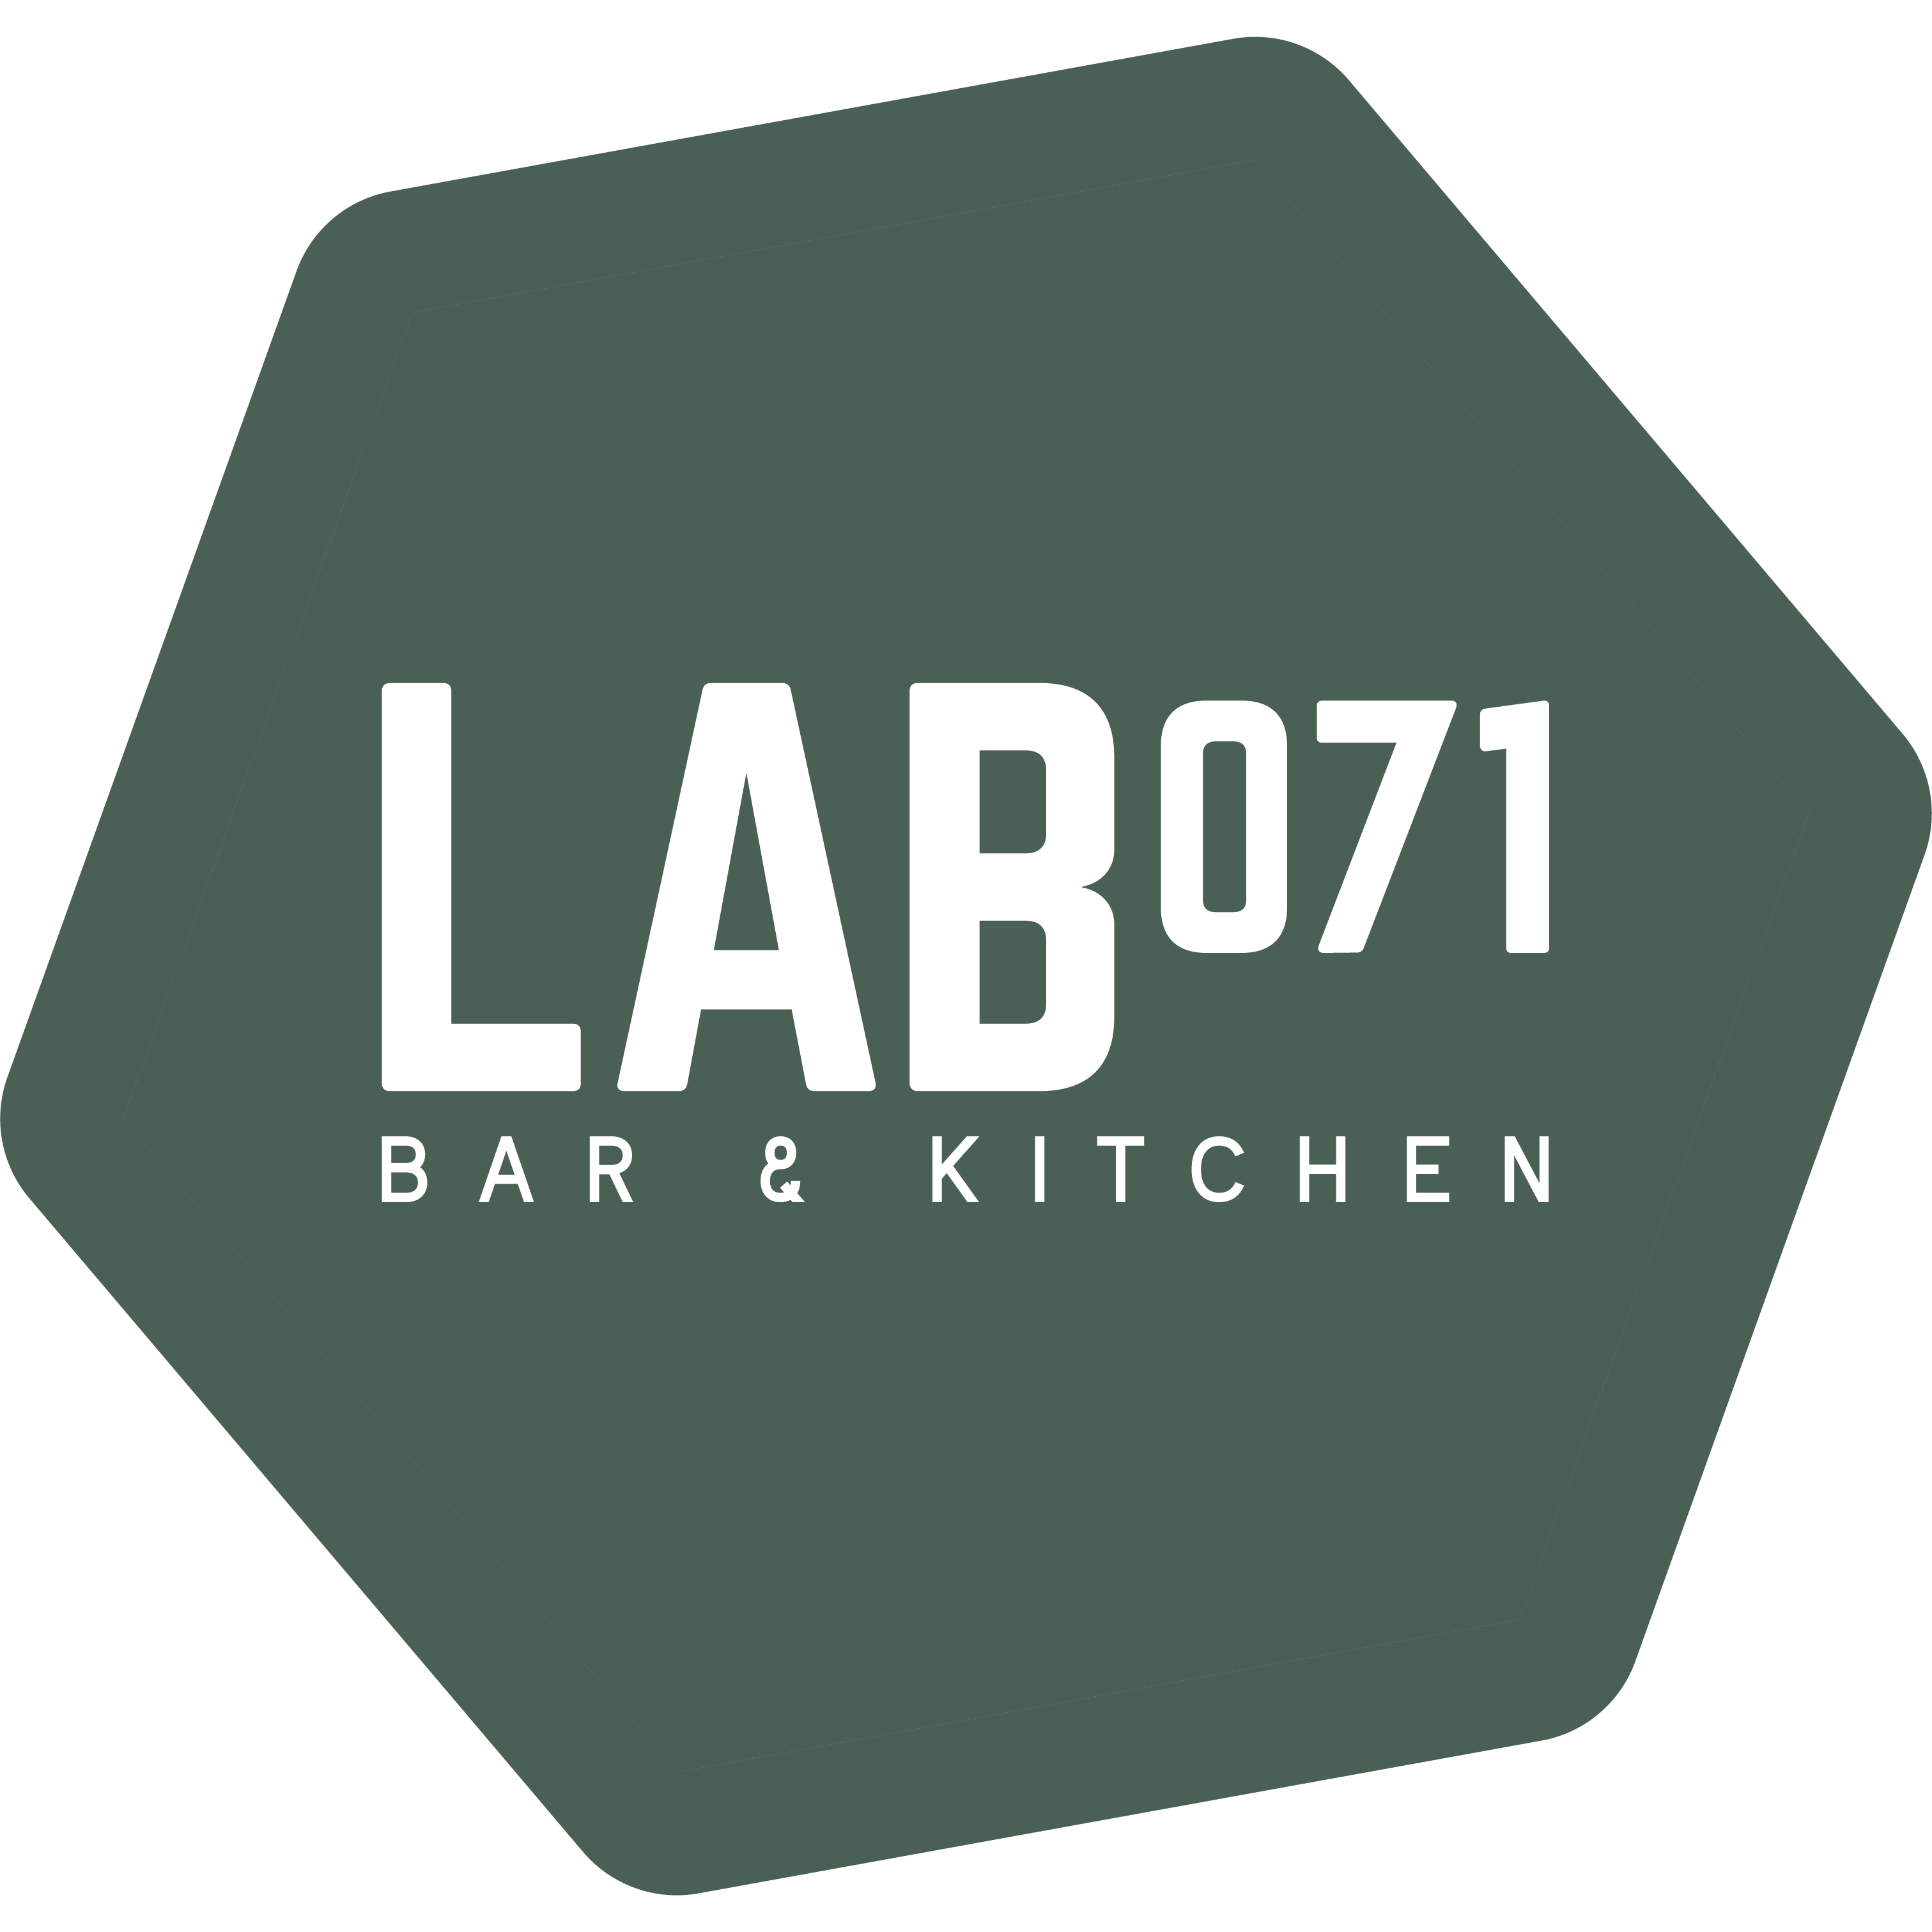 LAB071 Logo